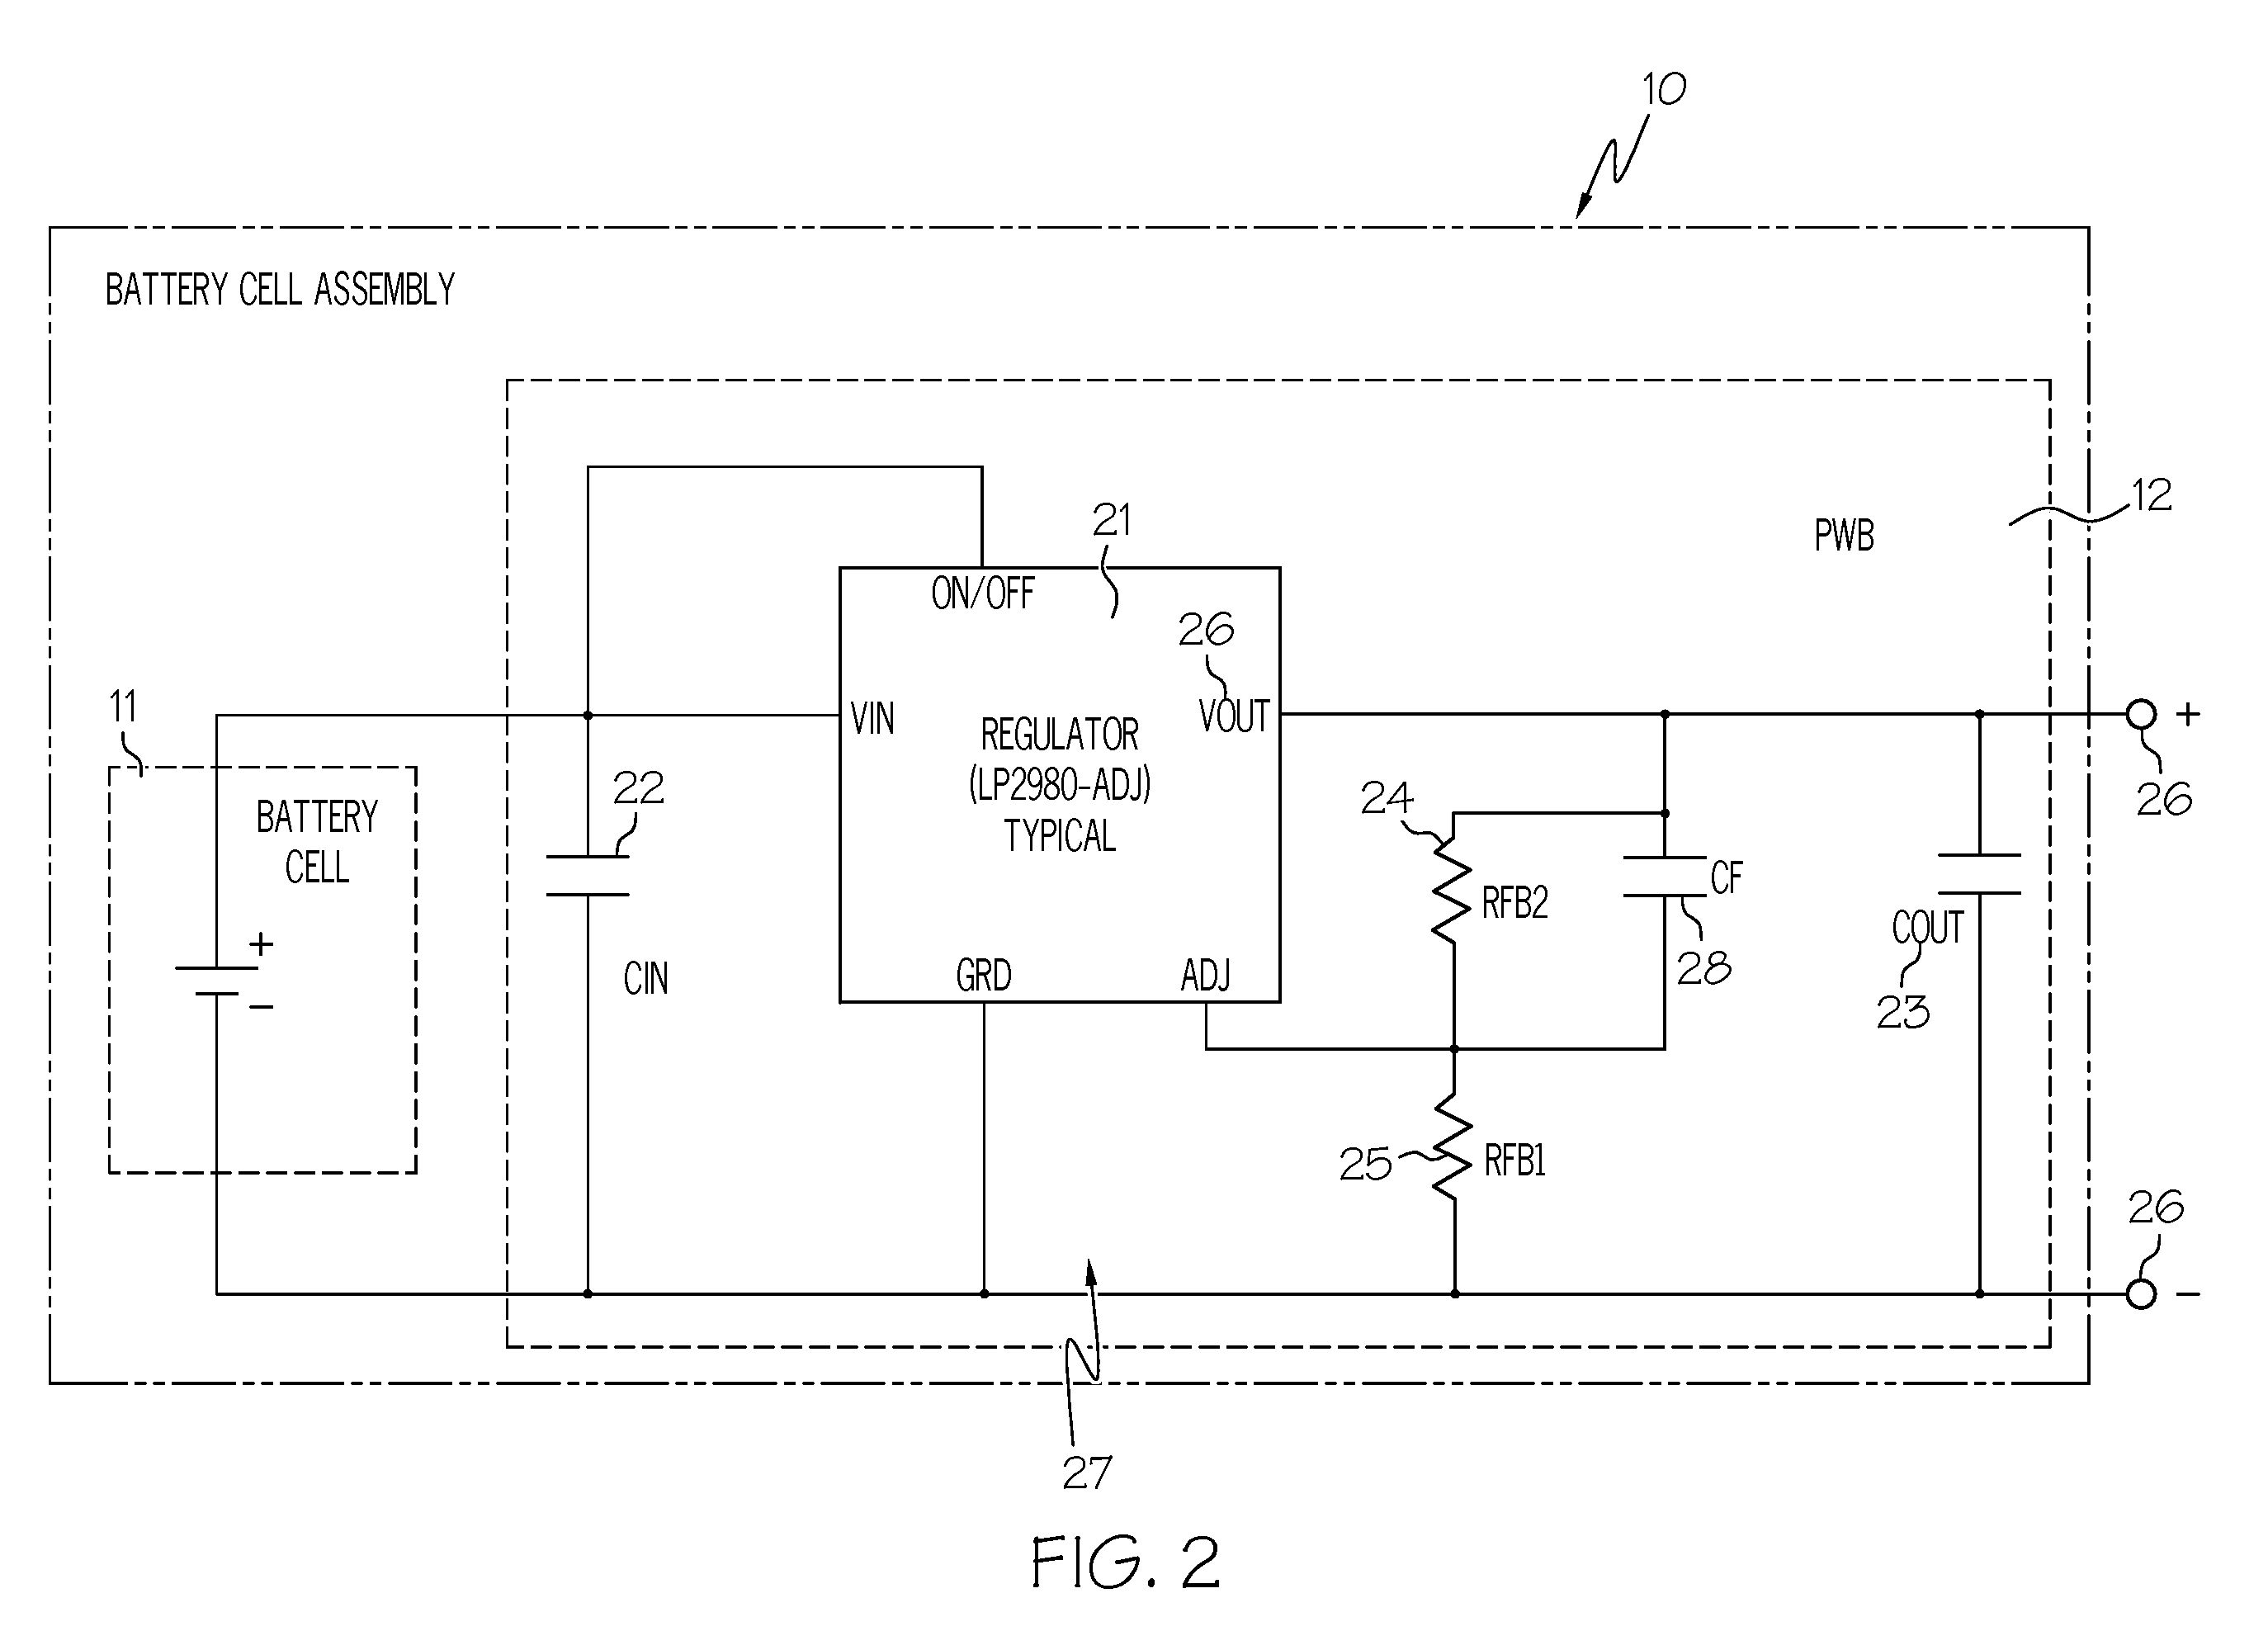 Primary battery with internal voltage regulator